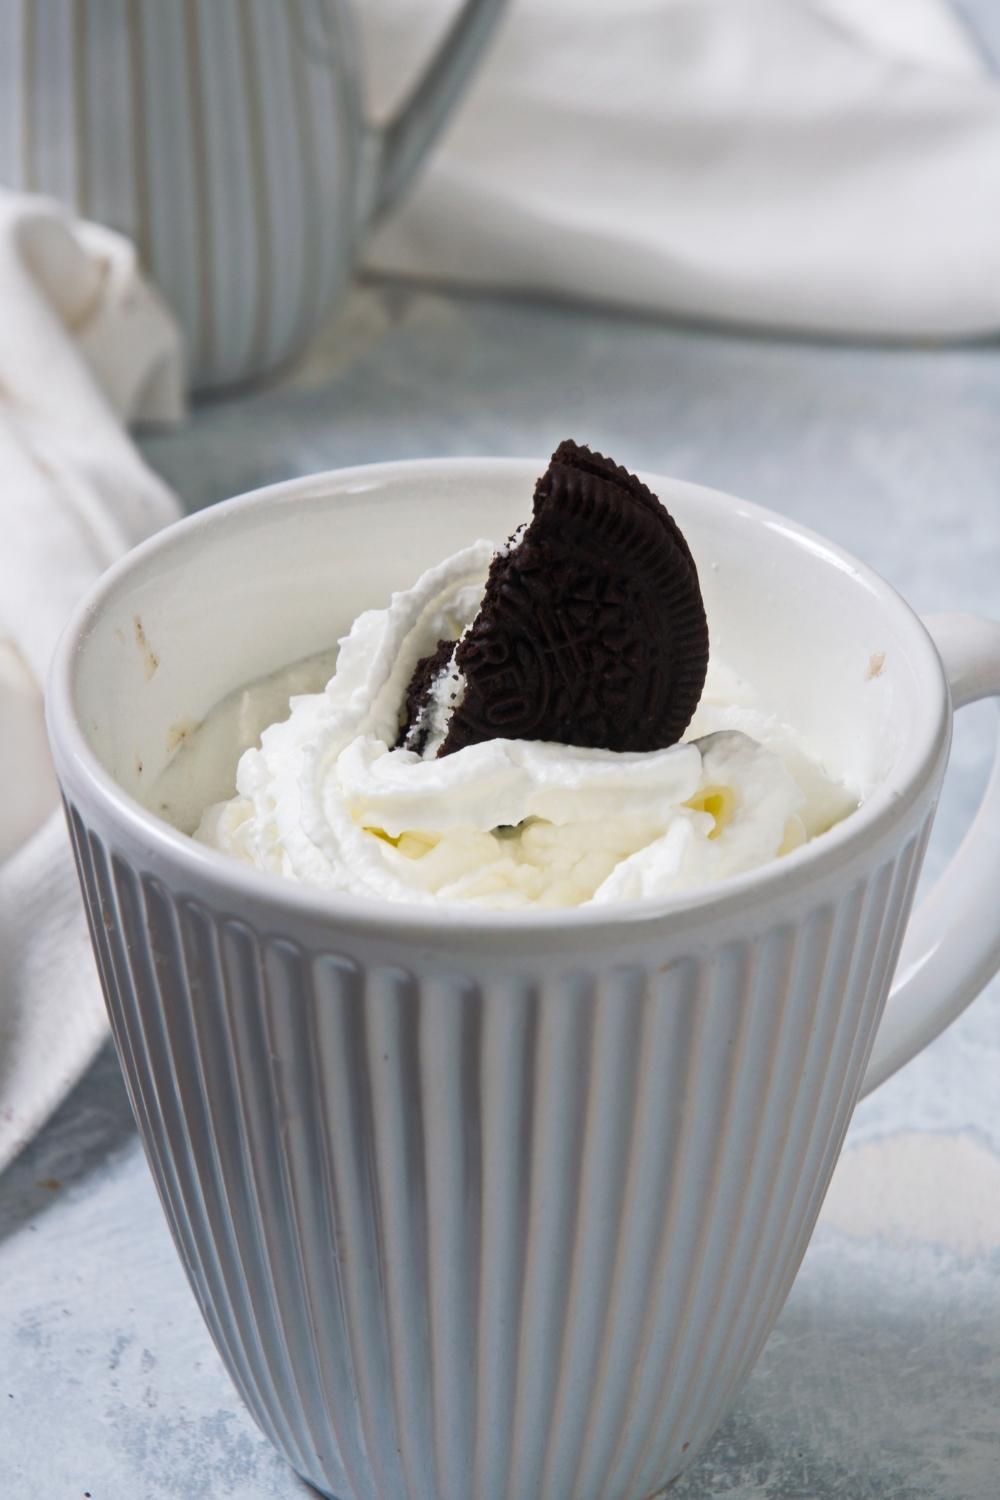 A close-up of a mug containing homemade Oreo mug cake topped with whipped cream and a half of an Oreo.